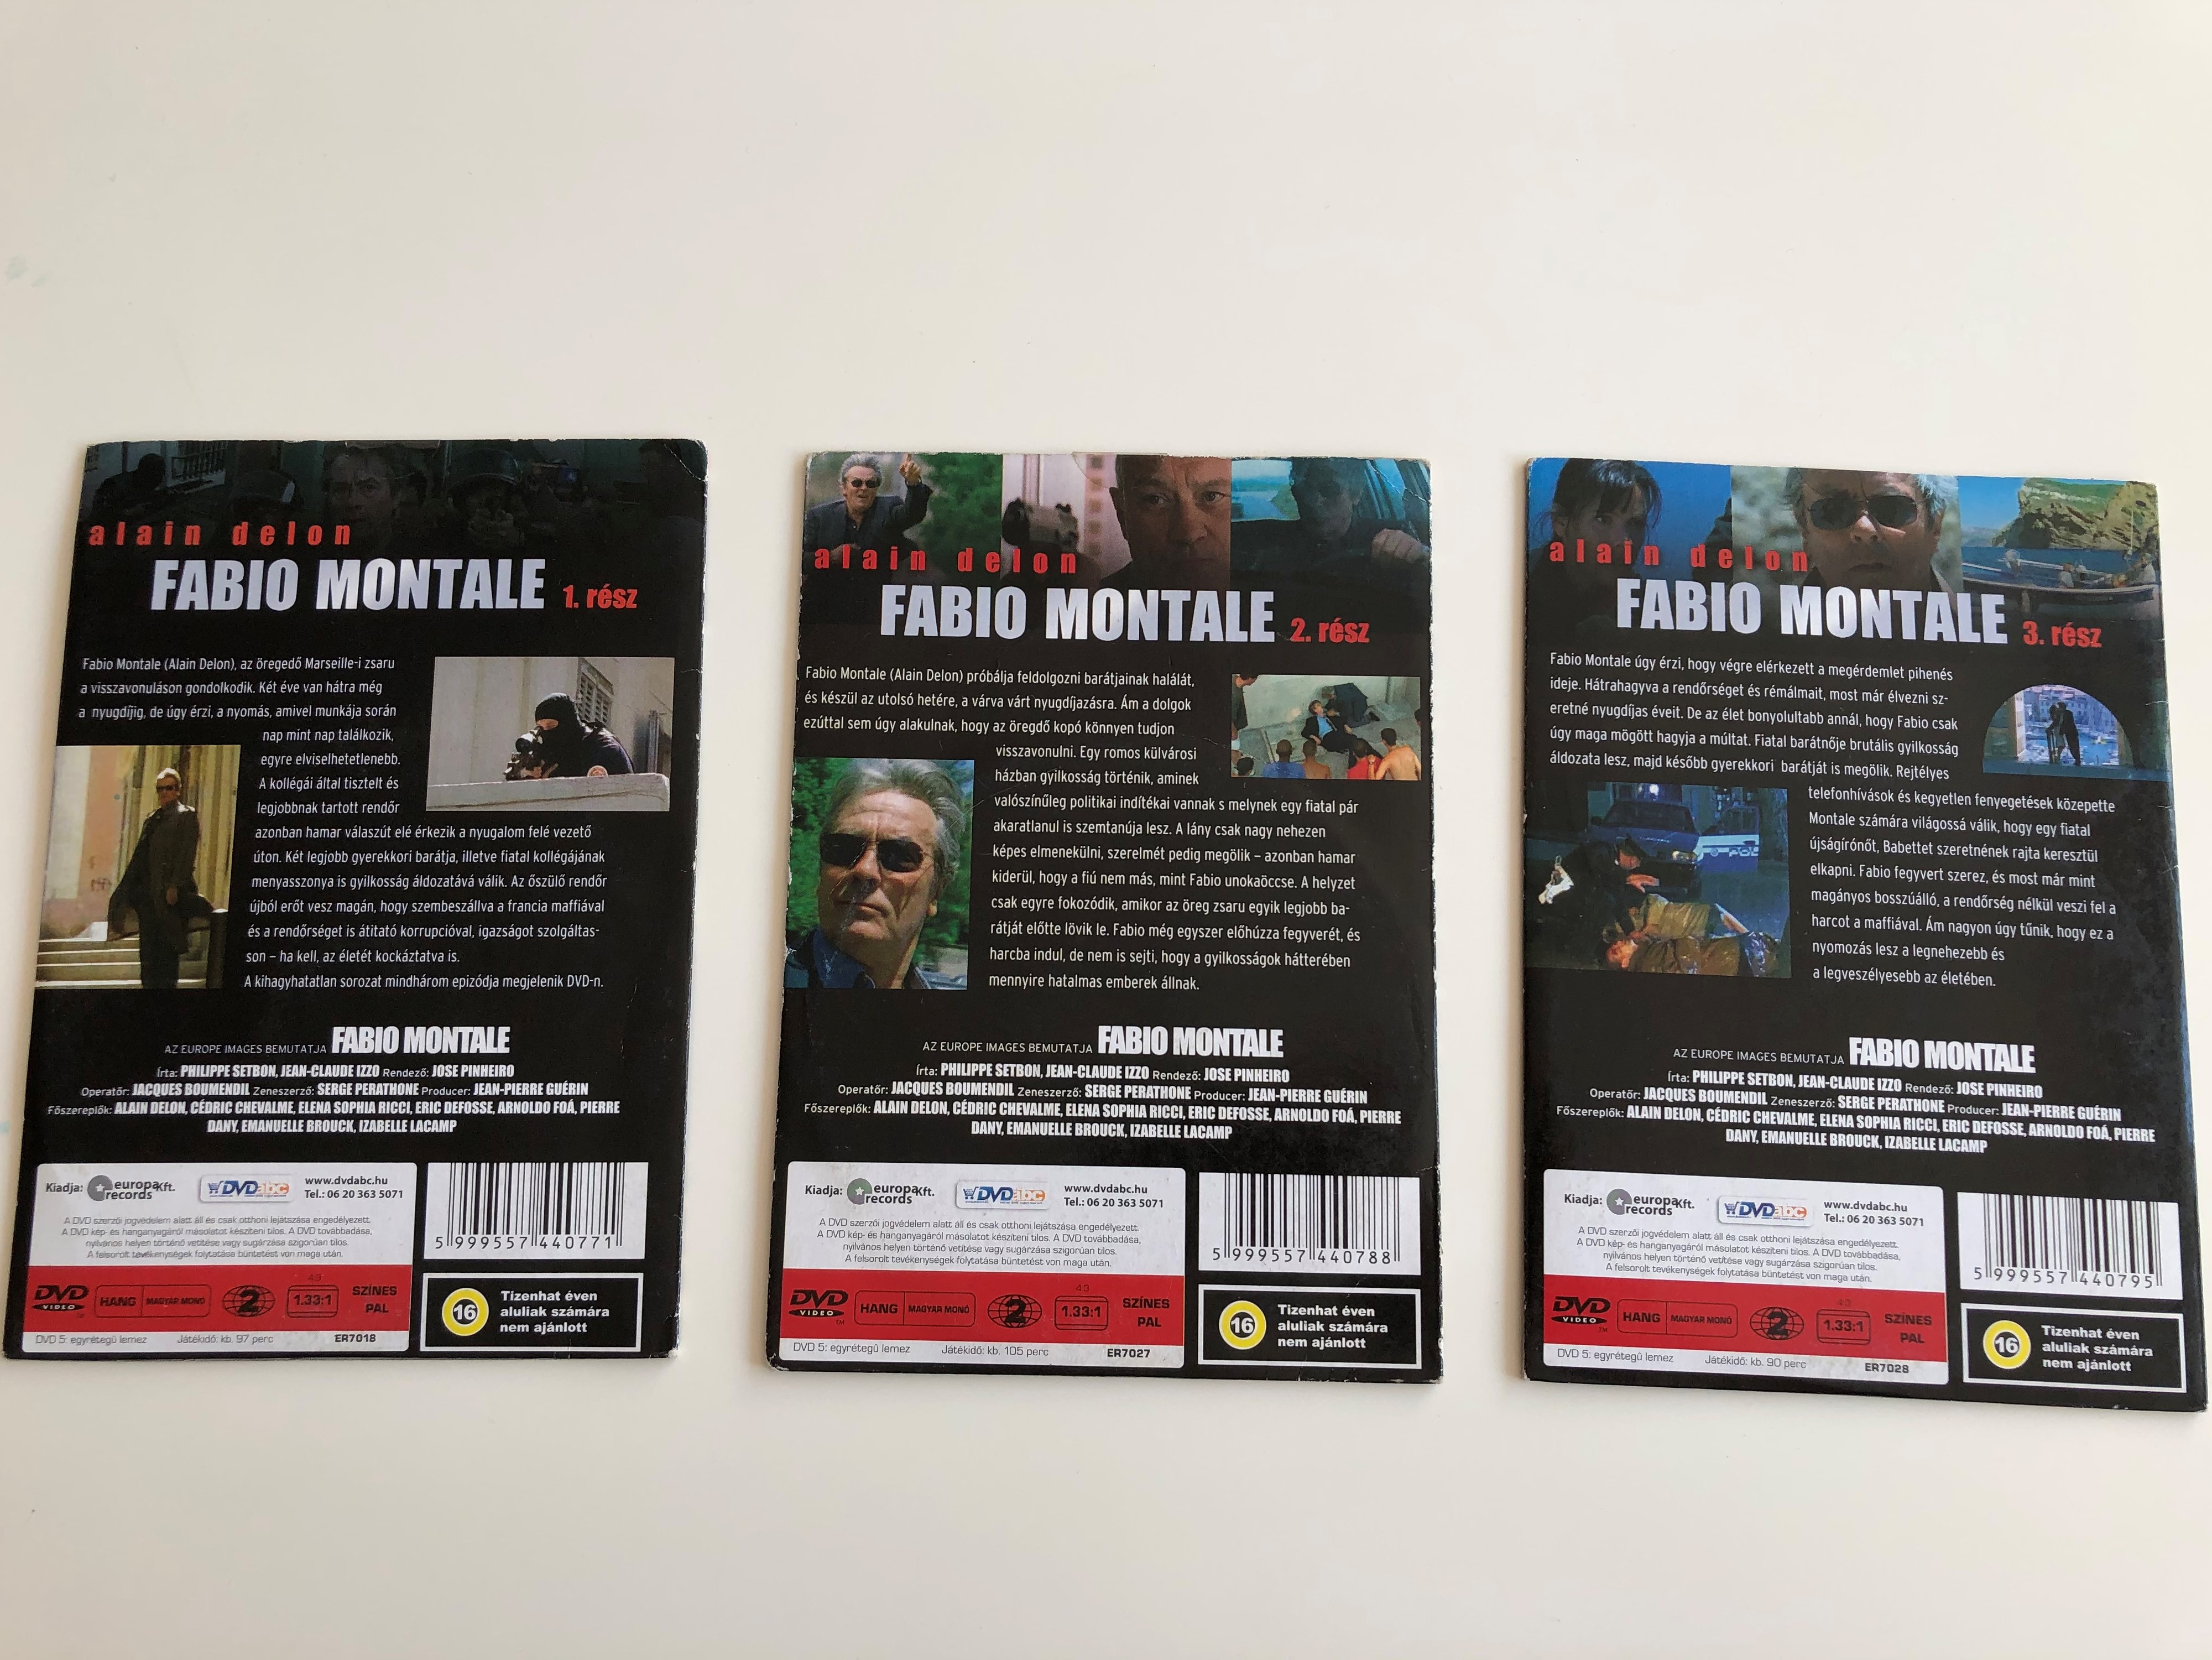 Fabio Montale Parts 1-3 DVD SET 2002 1.JPG